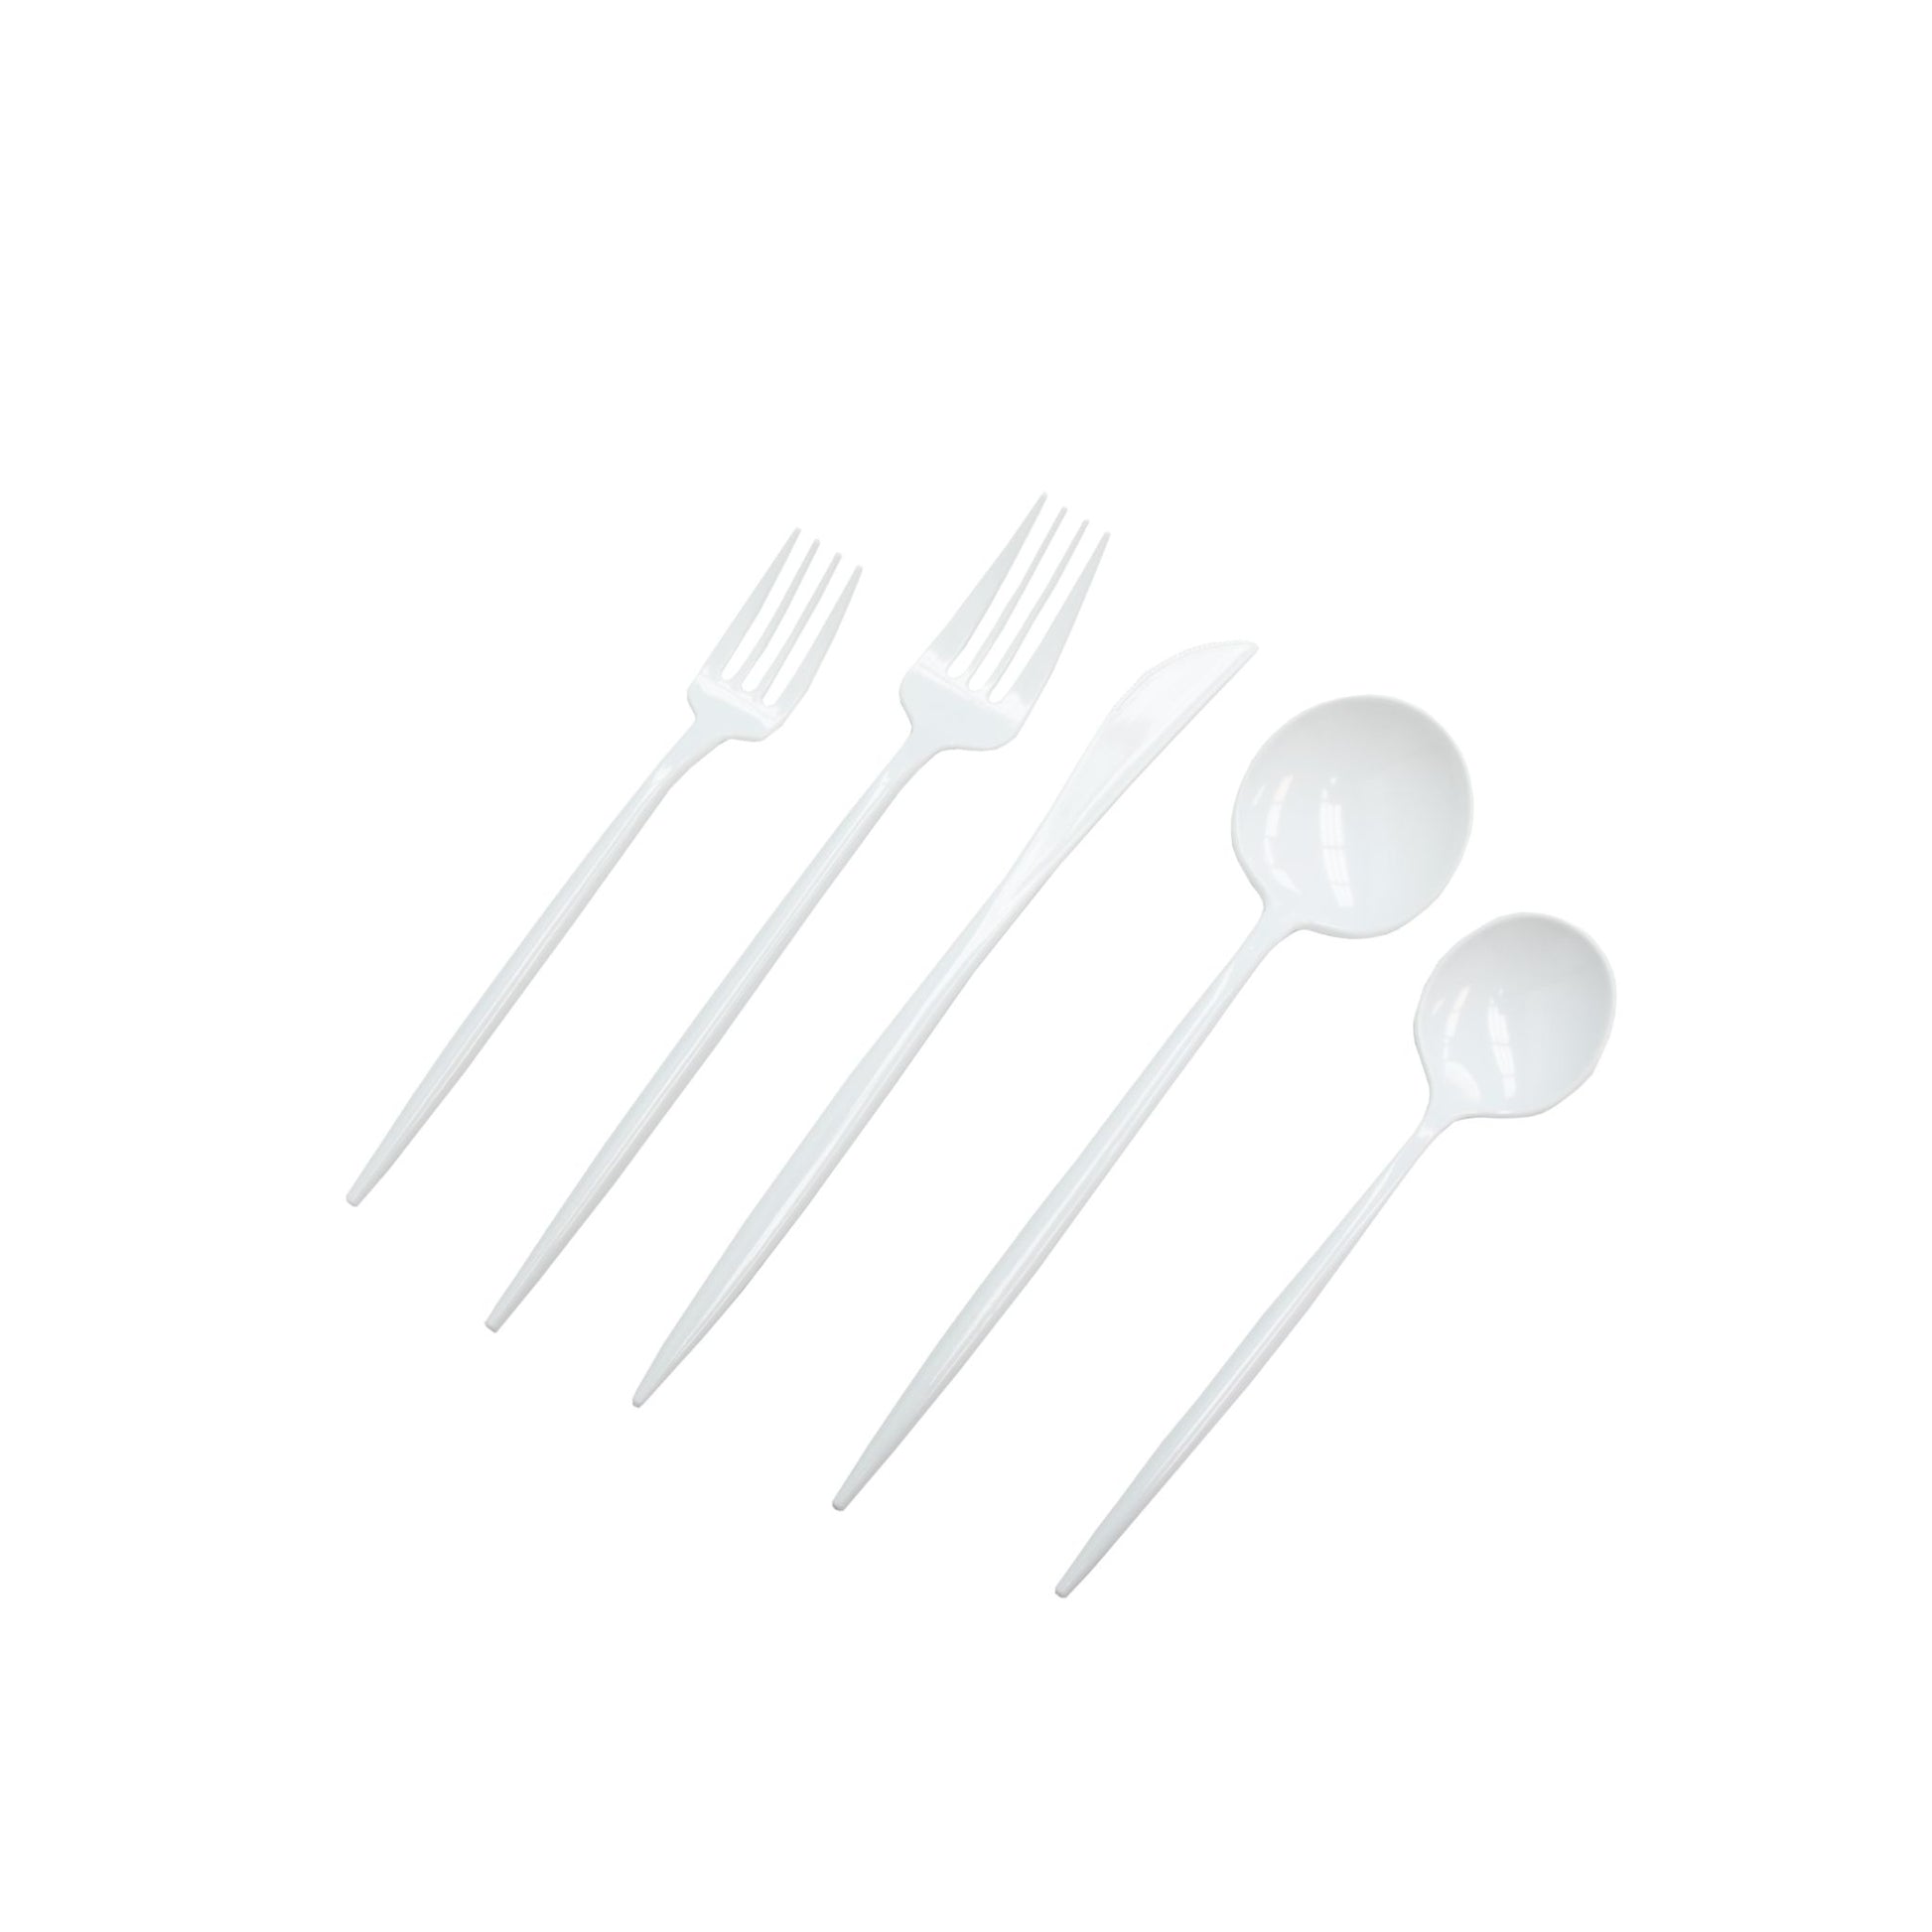 White Plastic Cutlery Set 100 pcs/pk - Mod Collection